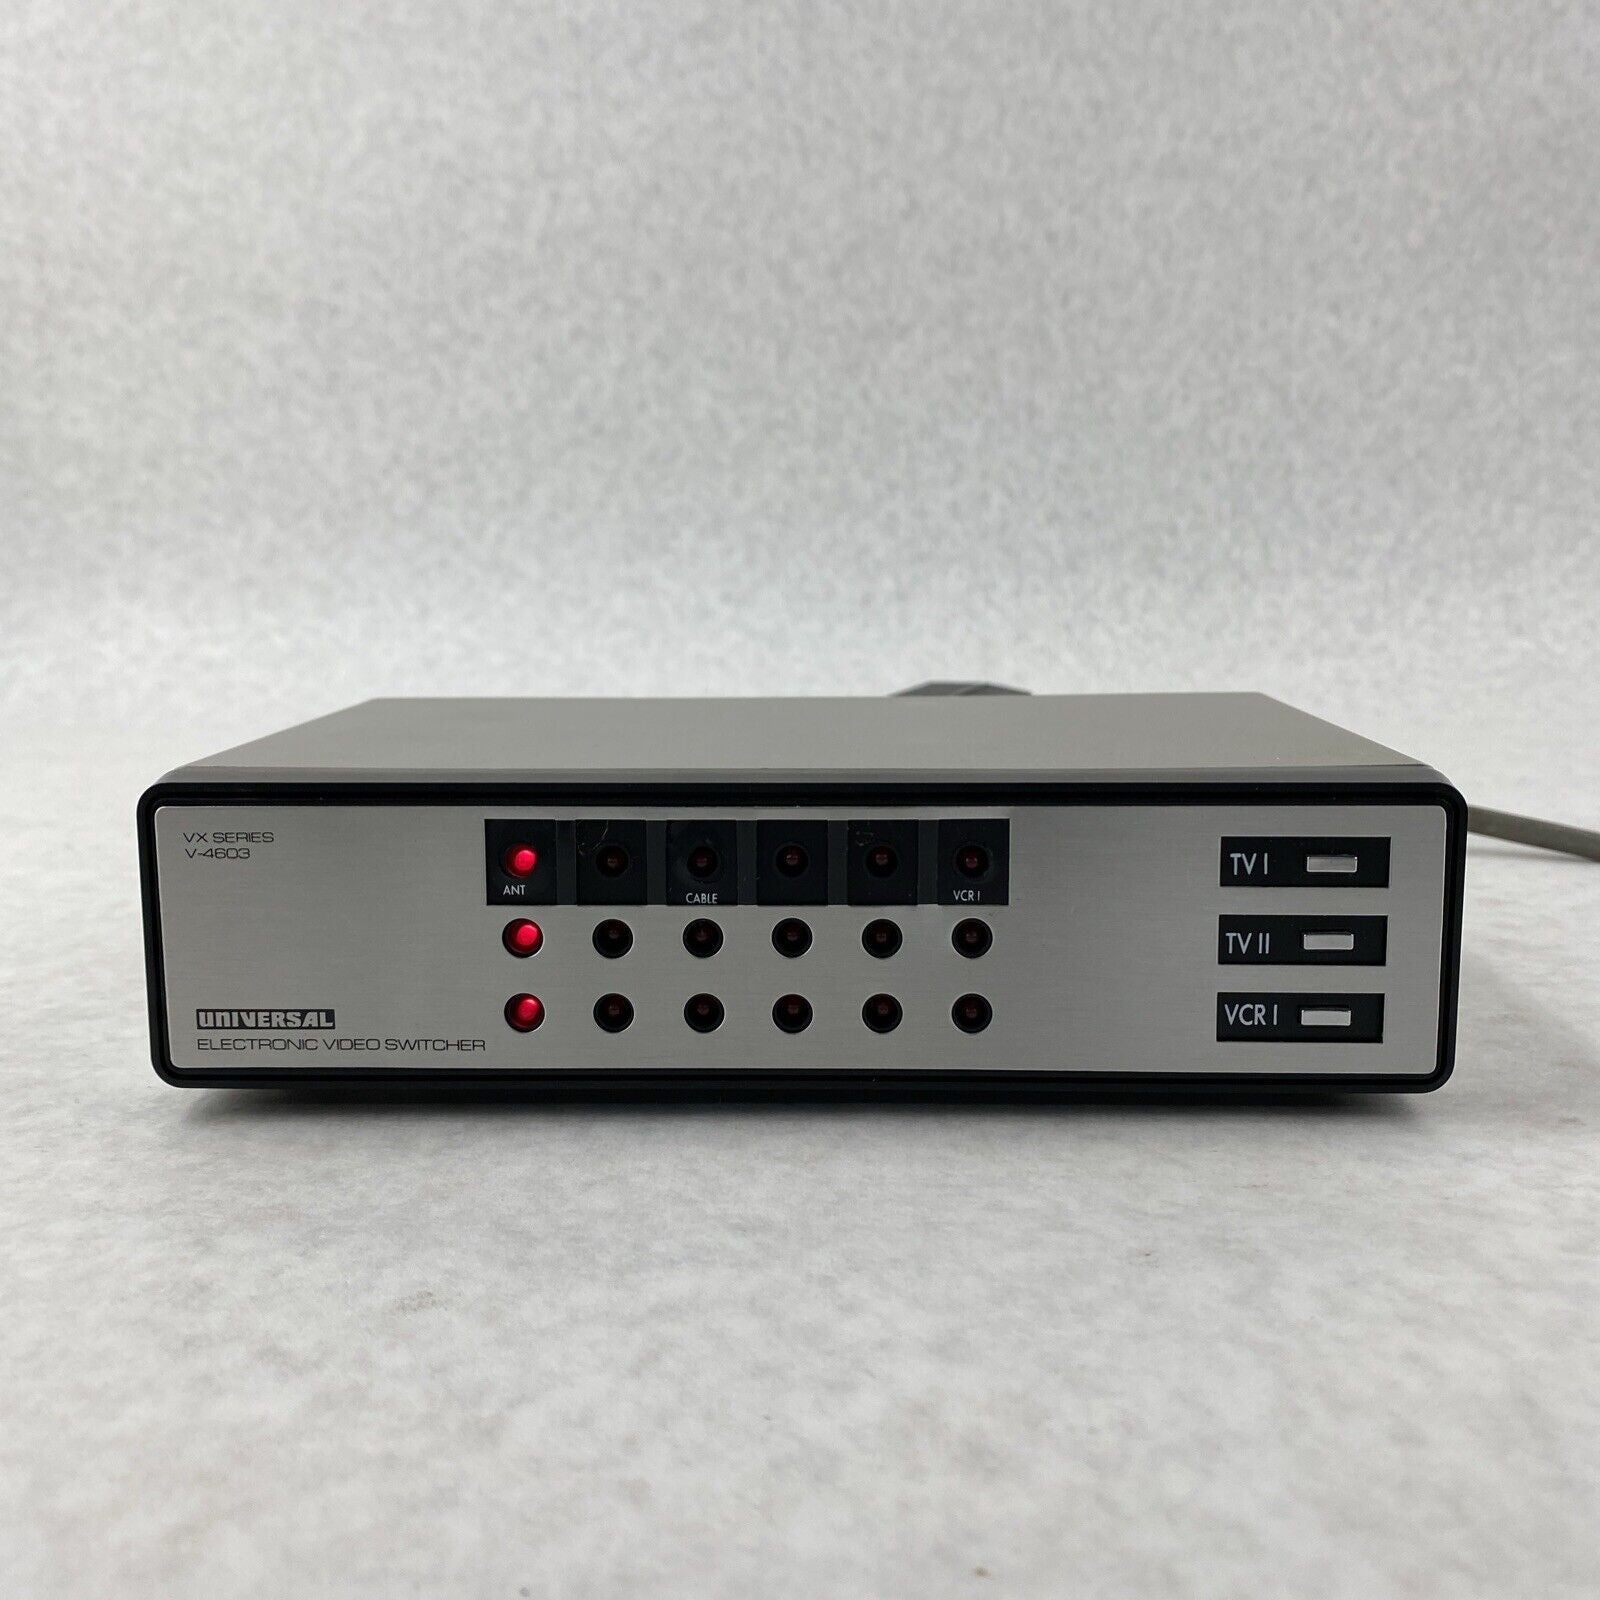 Universal V-4603 Vintage VX Series Electronic Video Switcher